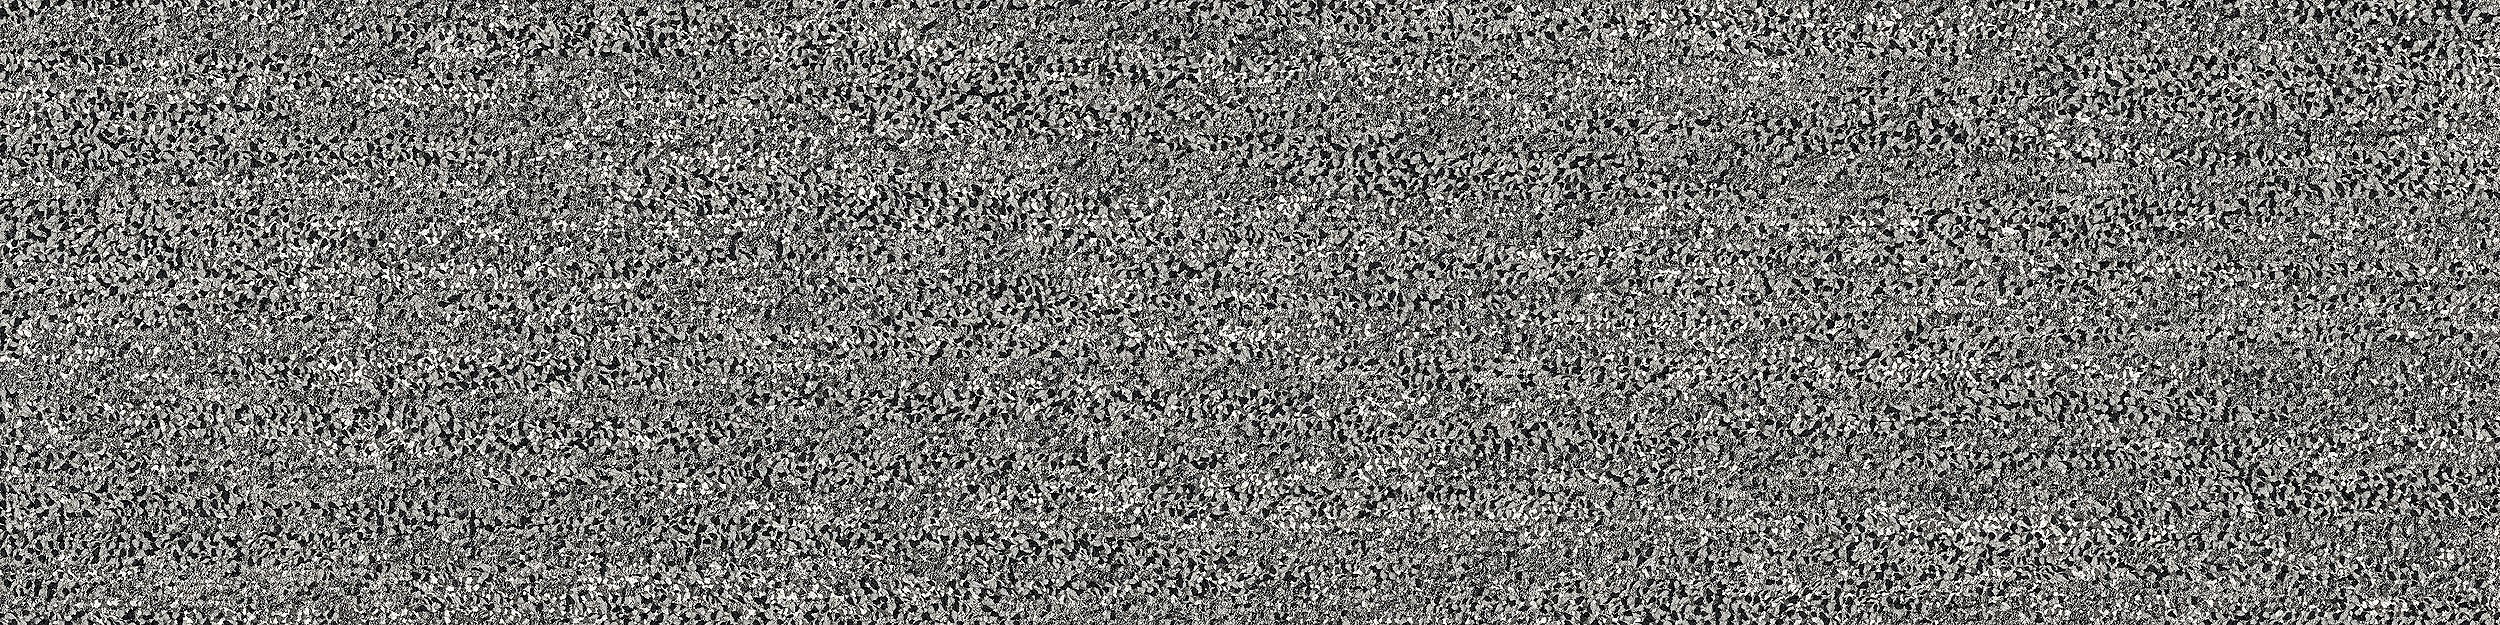 Mantle Rock Carpet Tile In Grey Stone imagen número 7